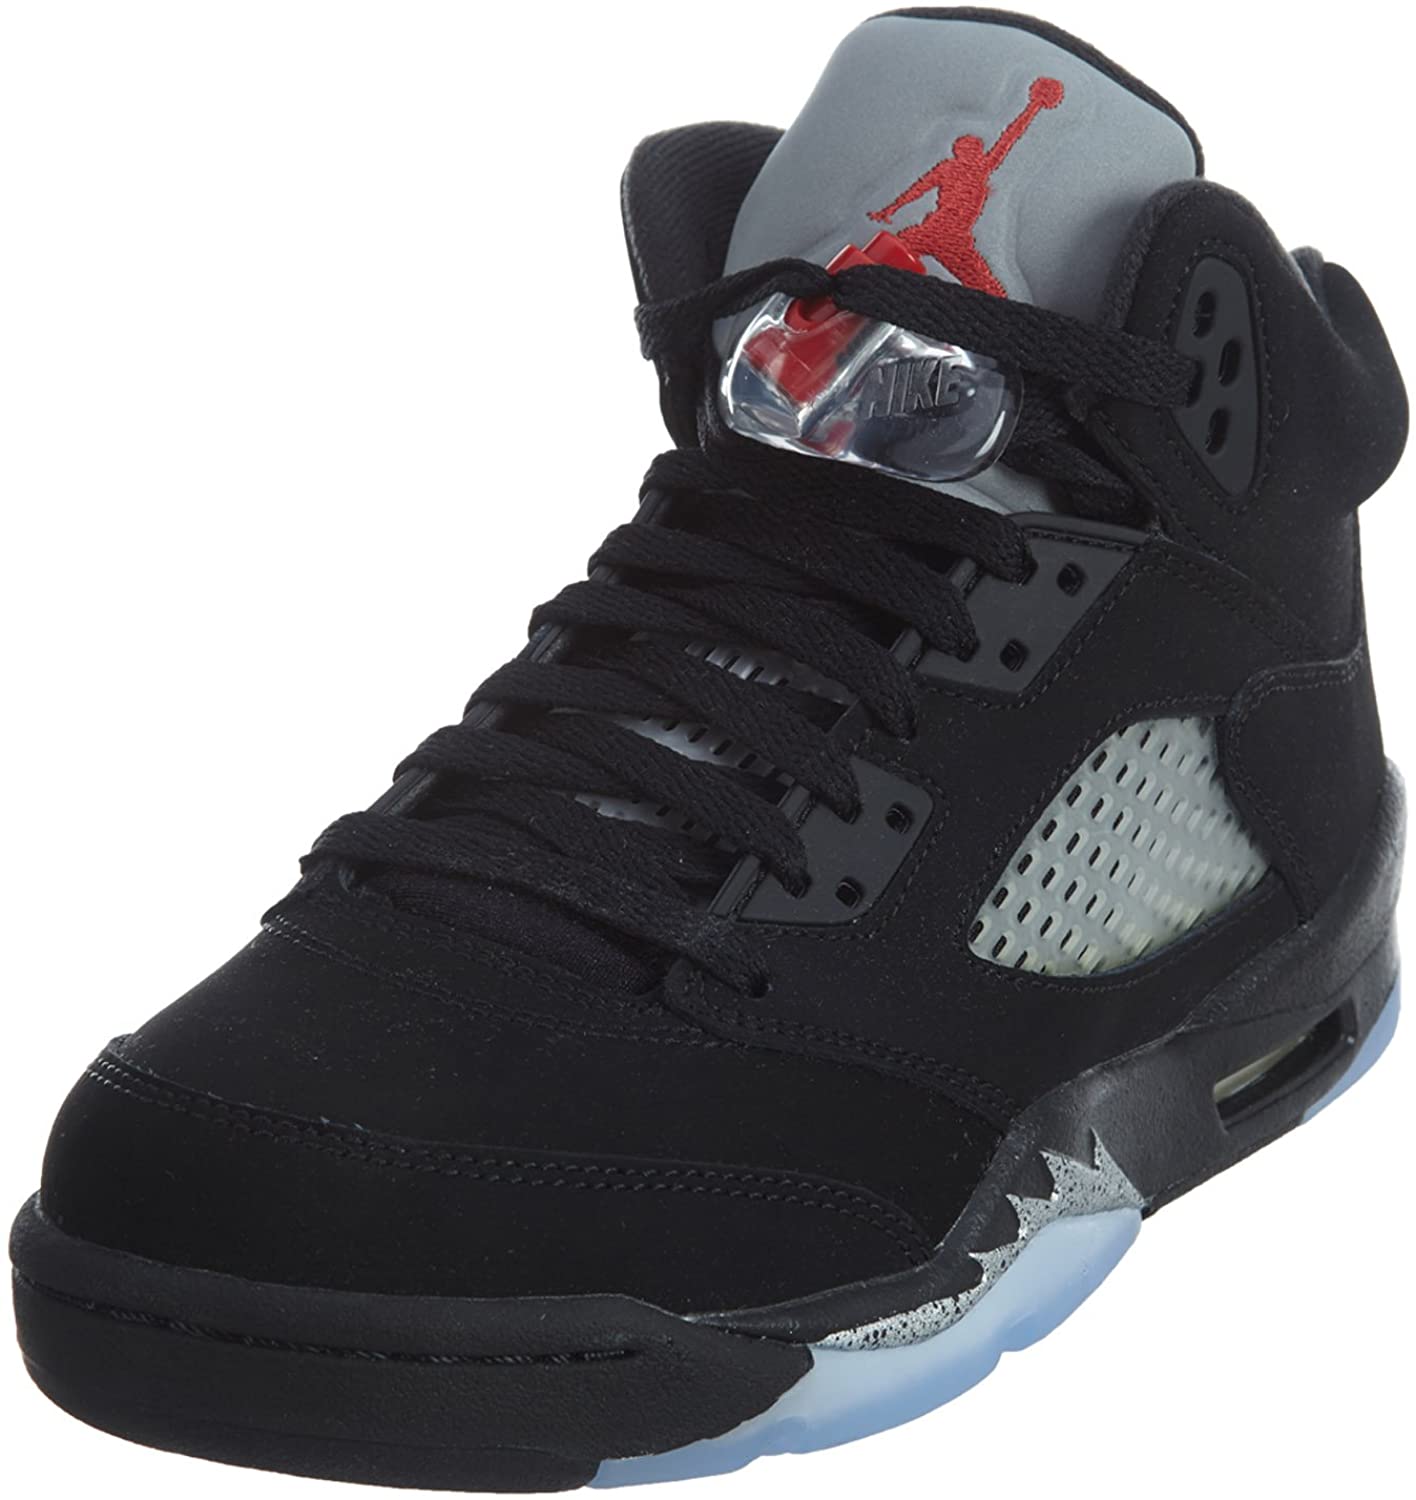 Chaussures Air Jordan 5 OG noires pour hommes,Nike AIR Jordan 5 ...